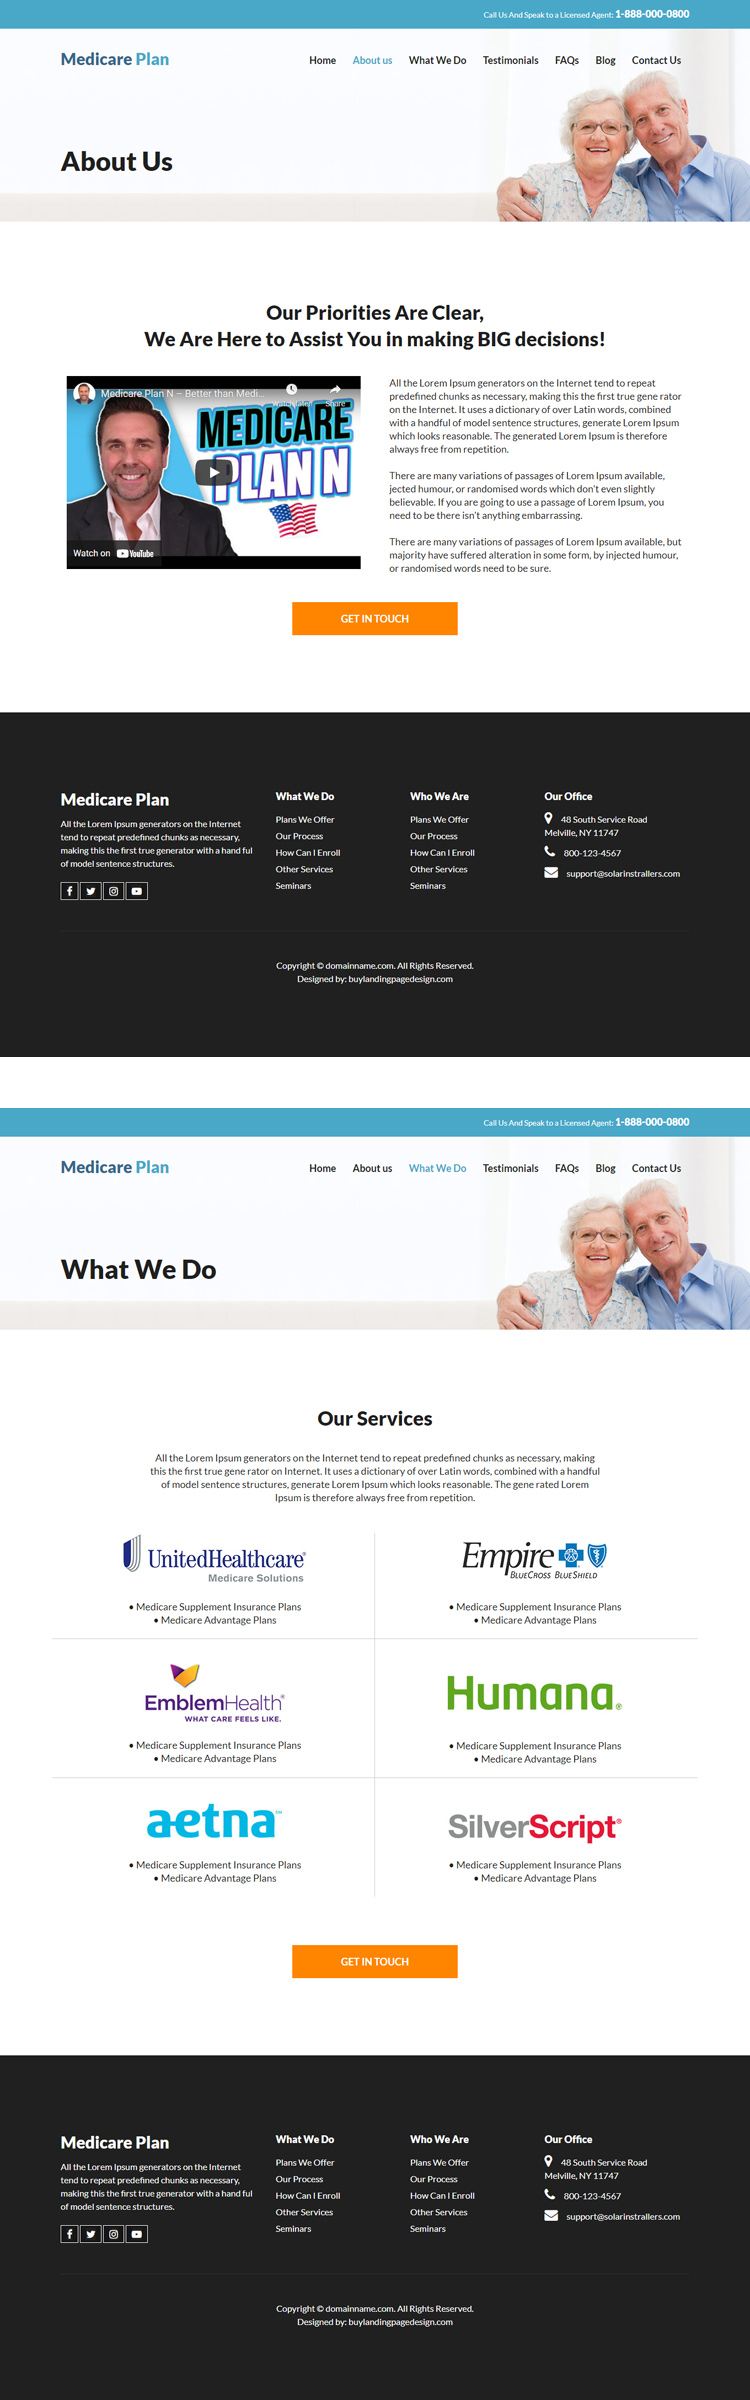 medicare supplement insurance plan responsive website design